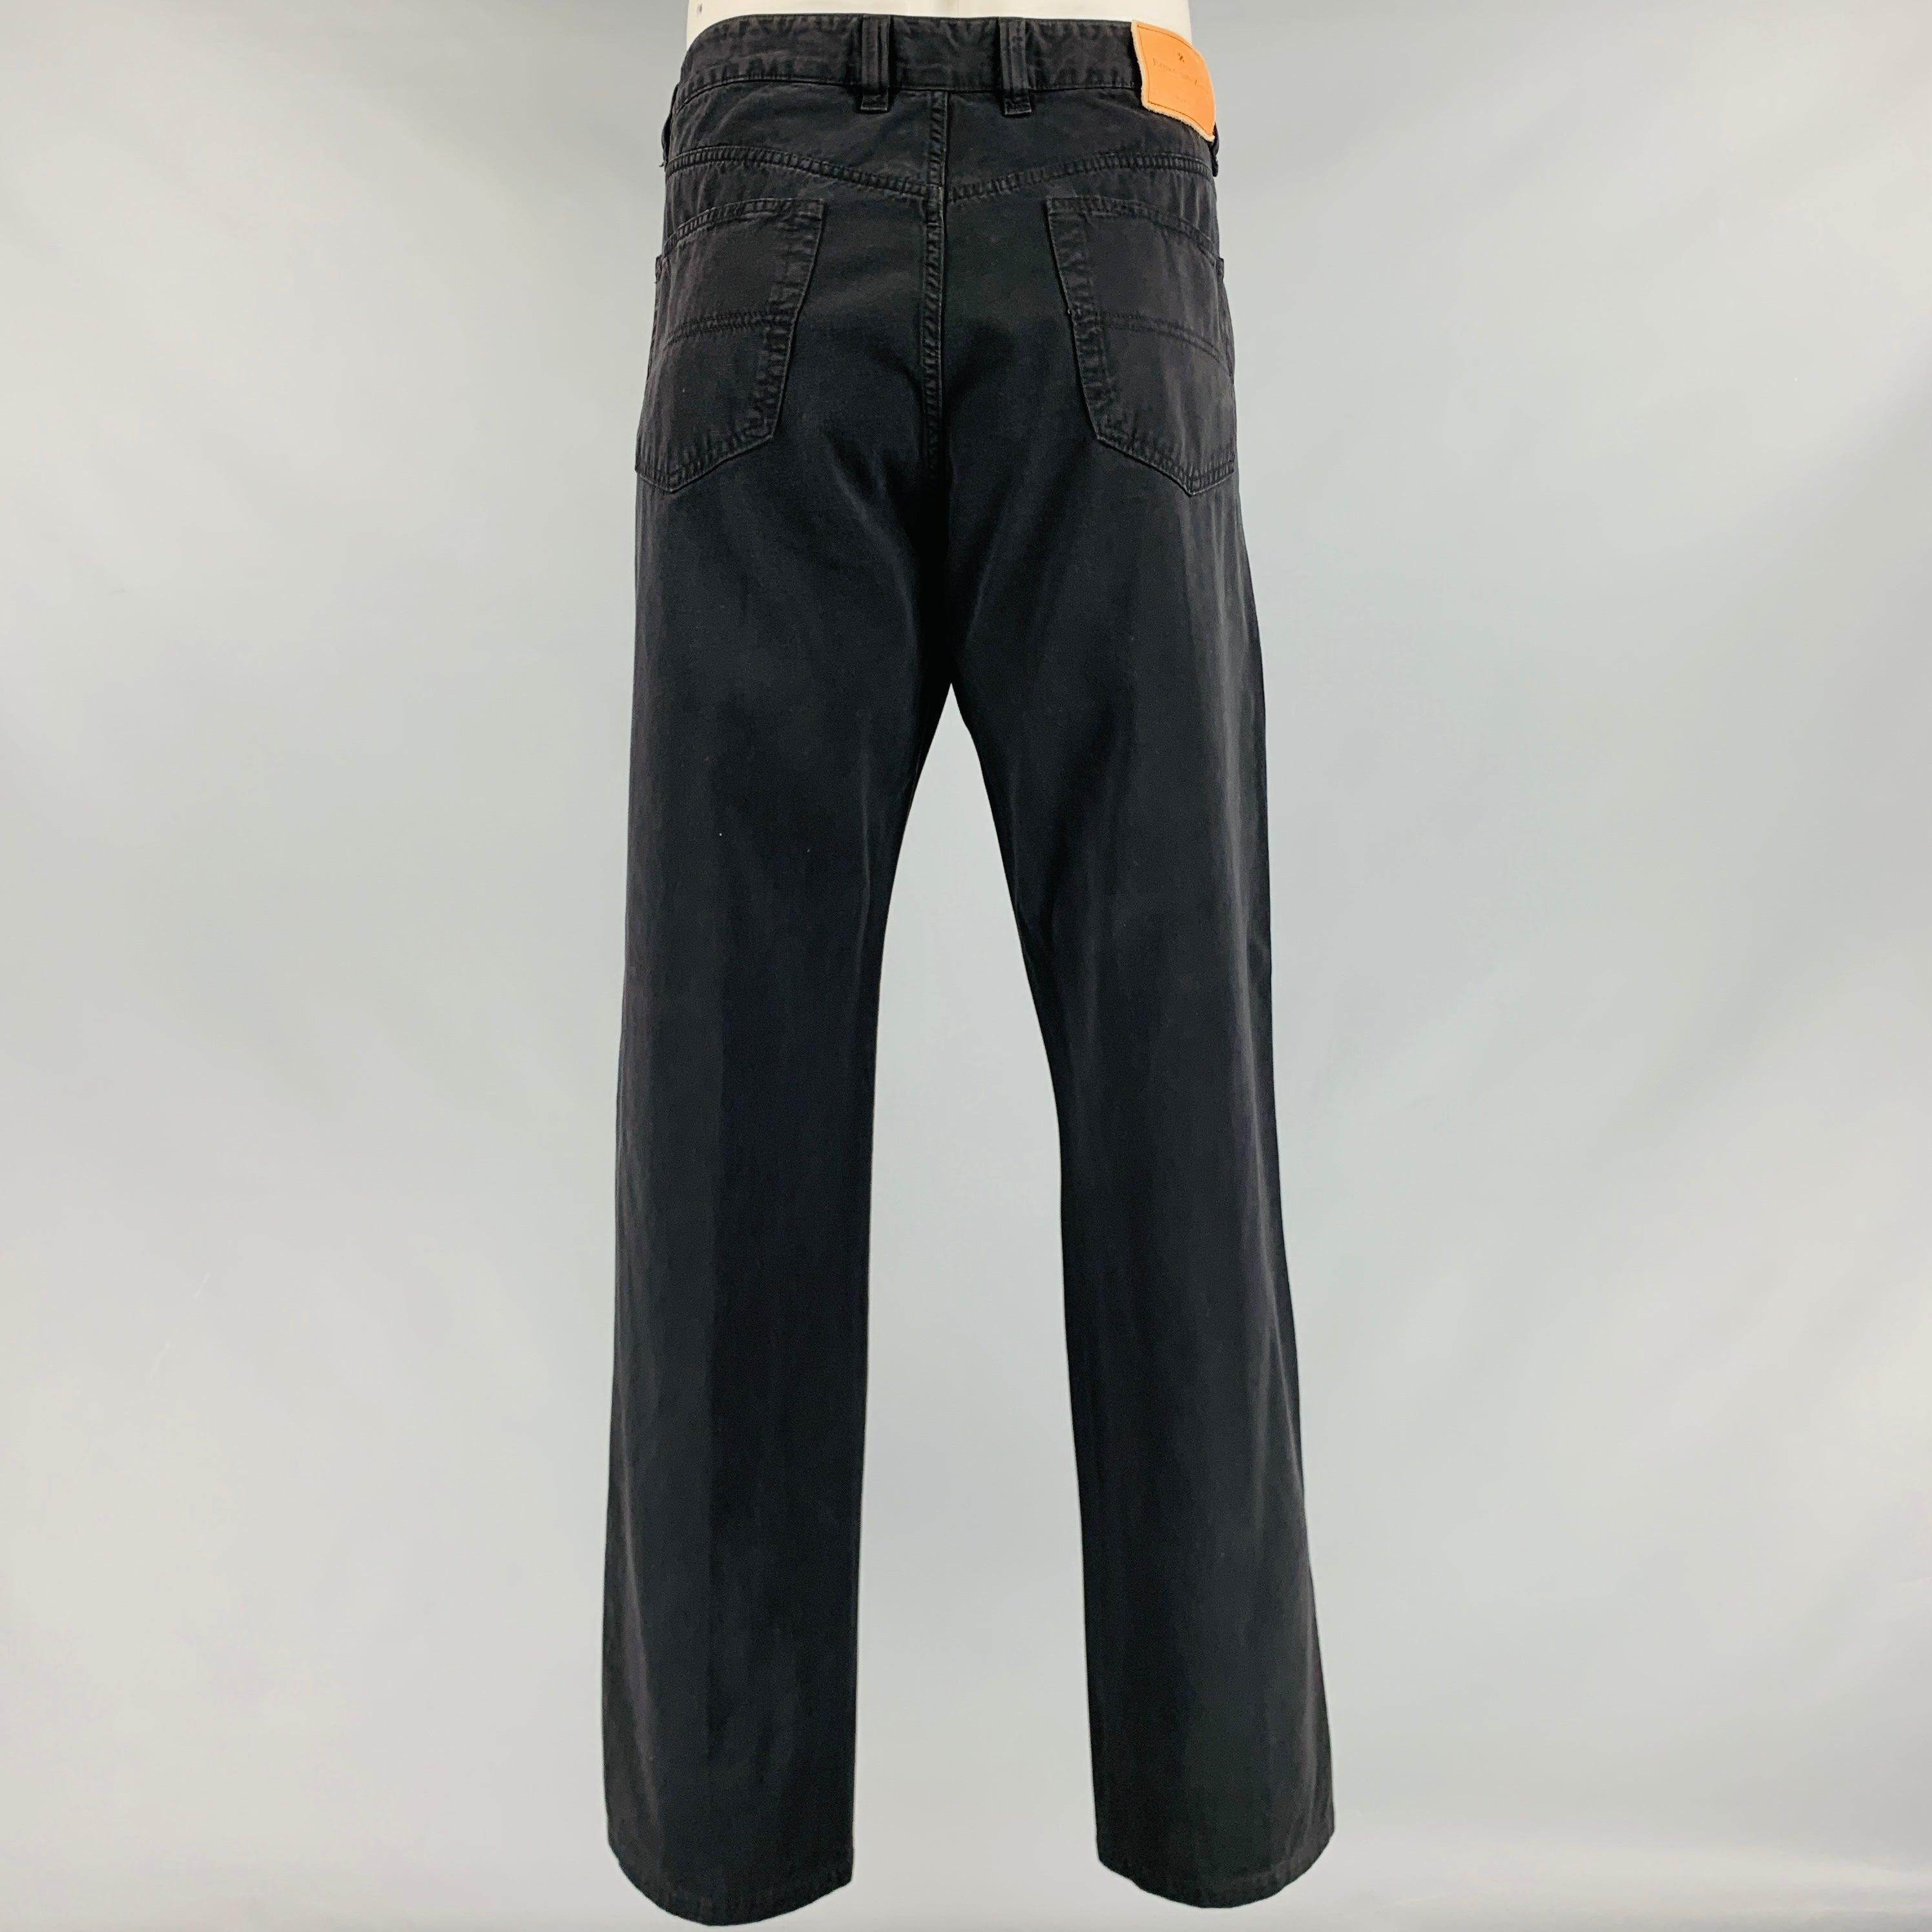 ERMENEGILDO ZEGNA Size 38 Black Cotton 5 pocket Casual Pants In Good Condition For Sale In San Francisco, CA